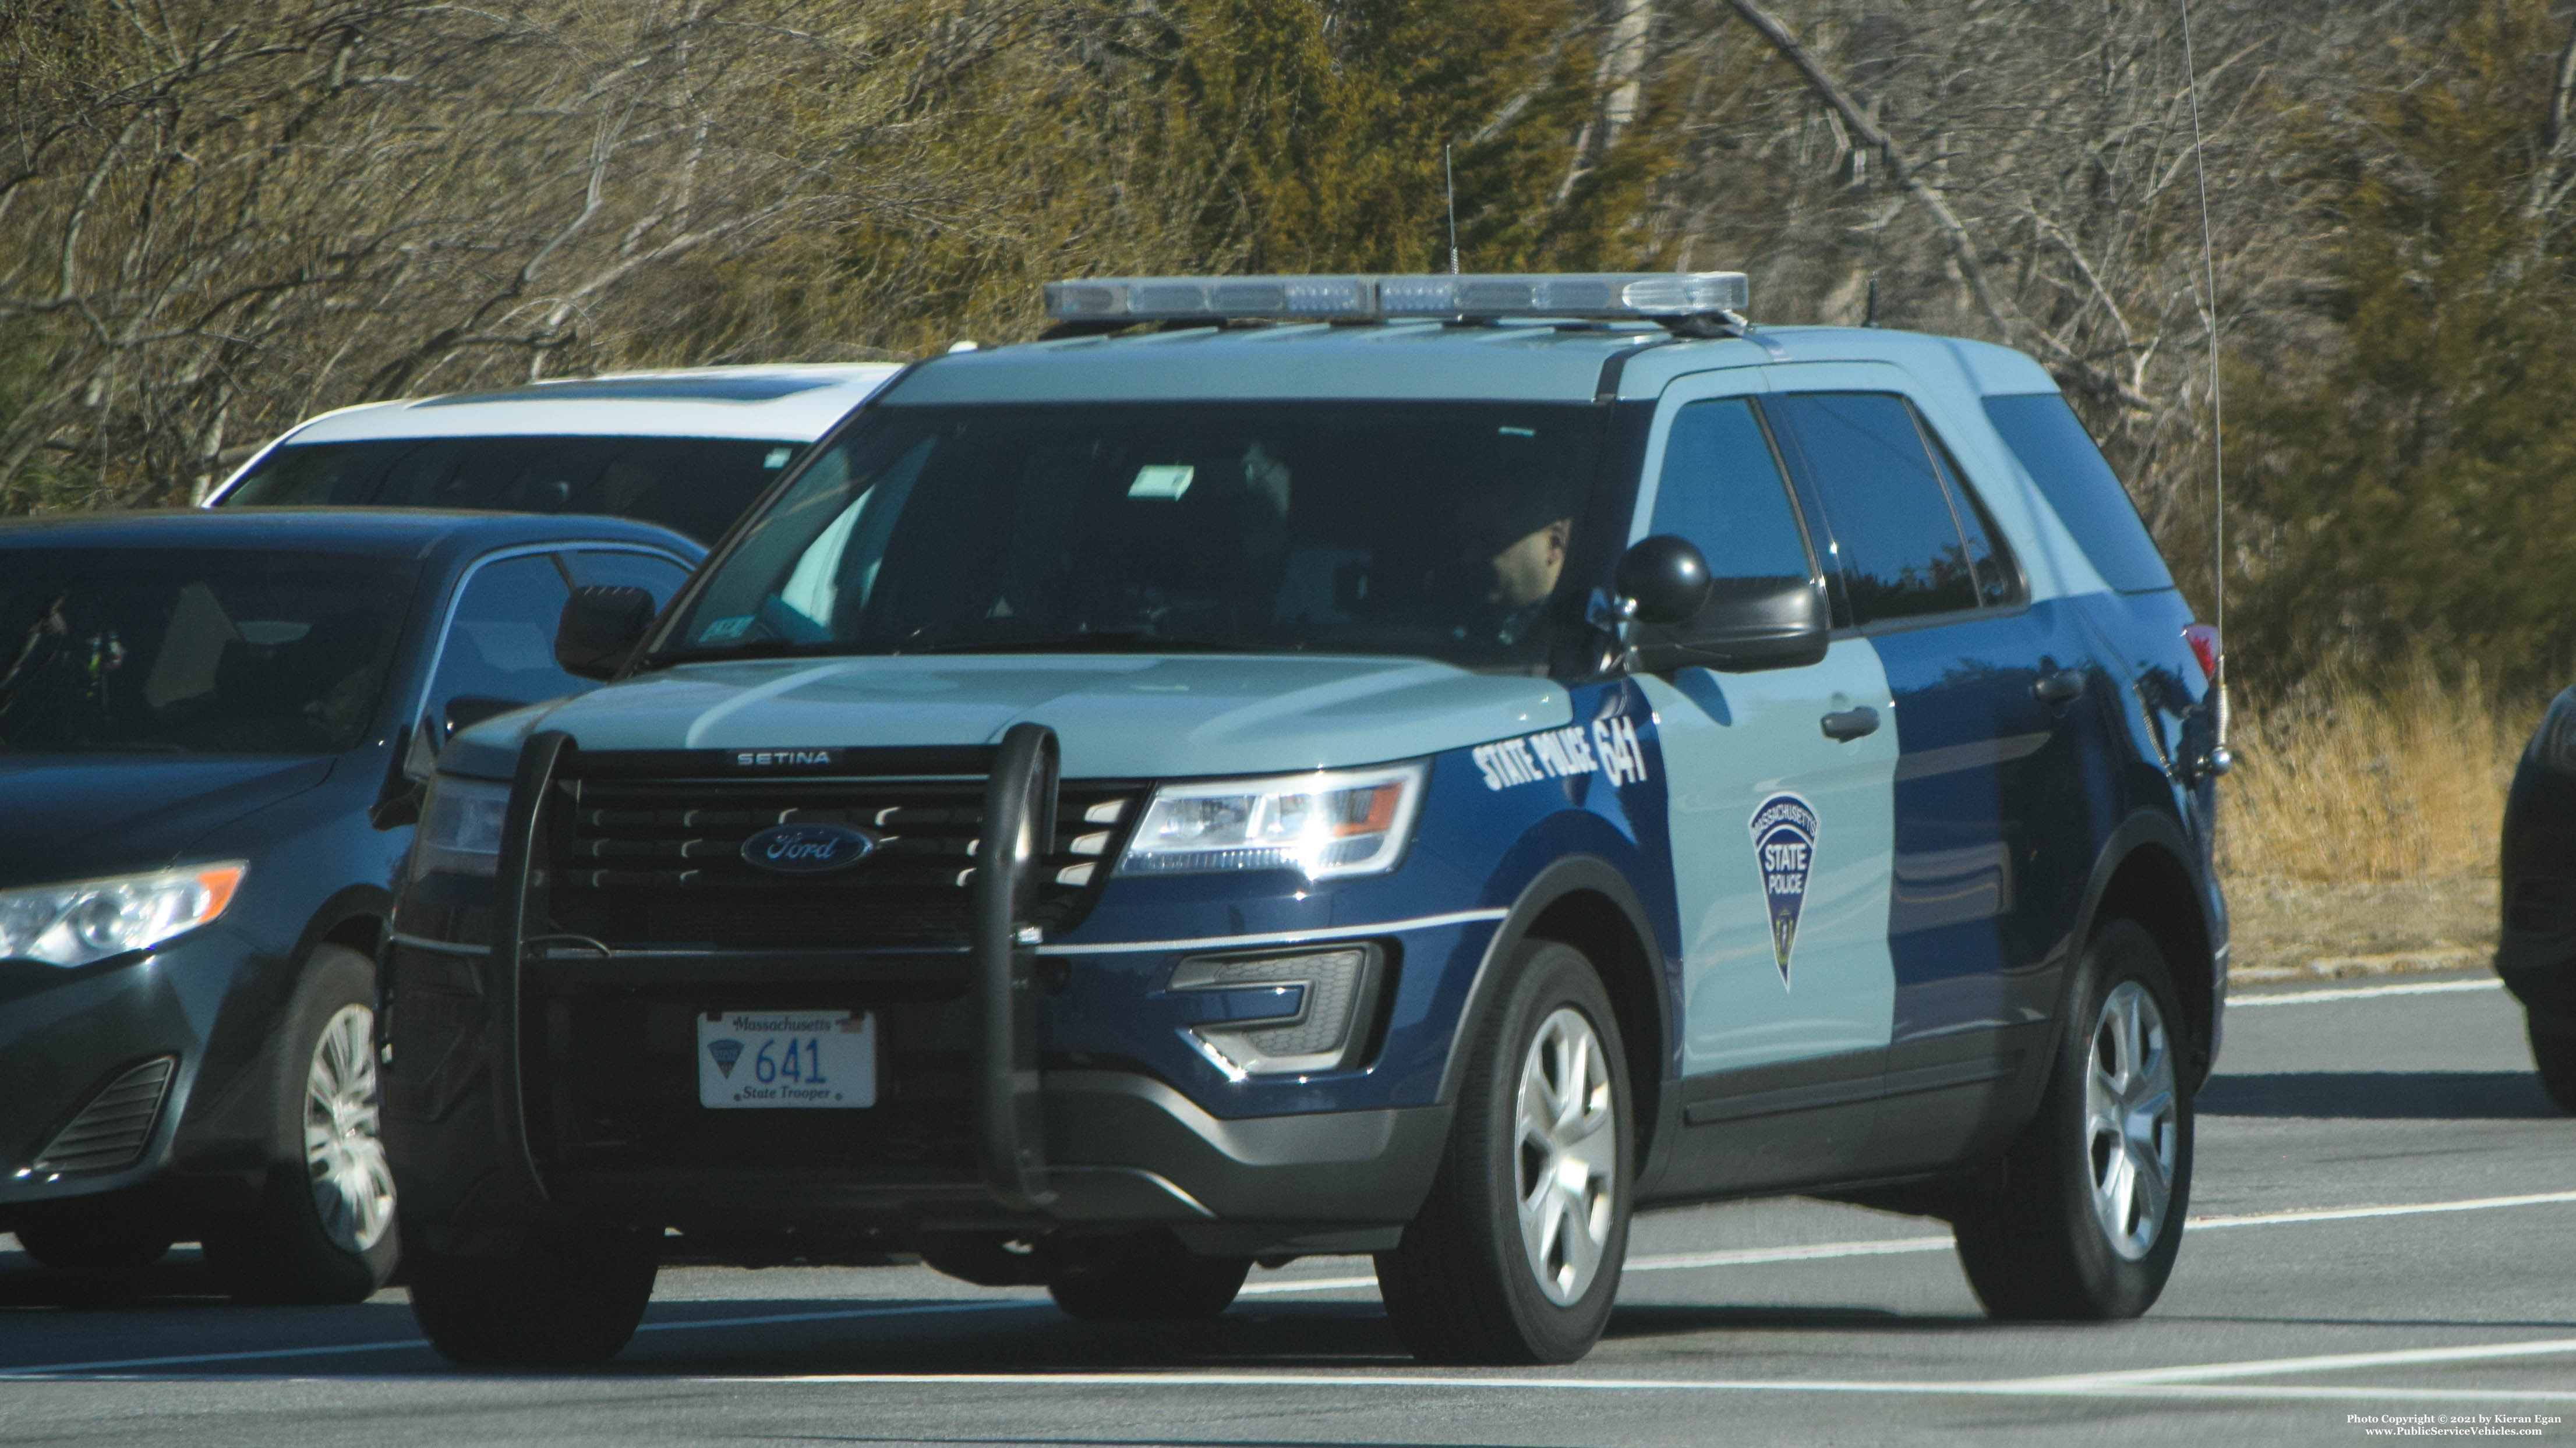 A photo  of Massachusetts State Police
            Cruiser 641, a 2018 Ford Police Interceptor Utility             taken by Kieran Egan